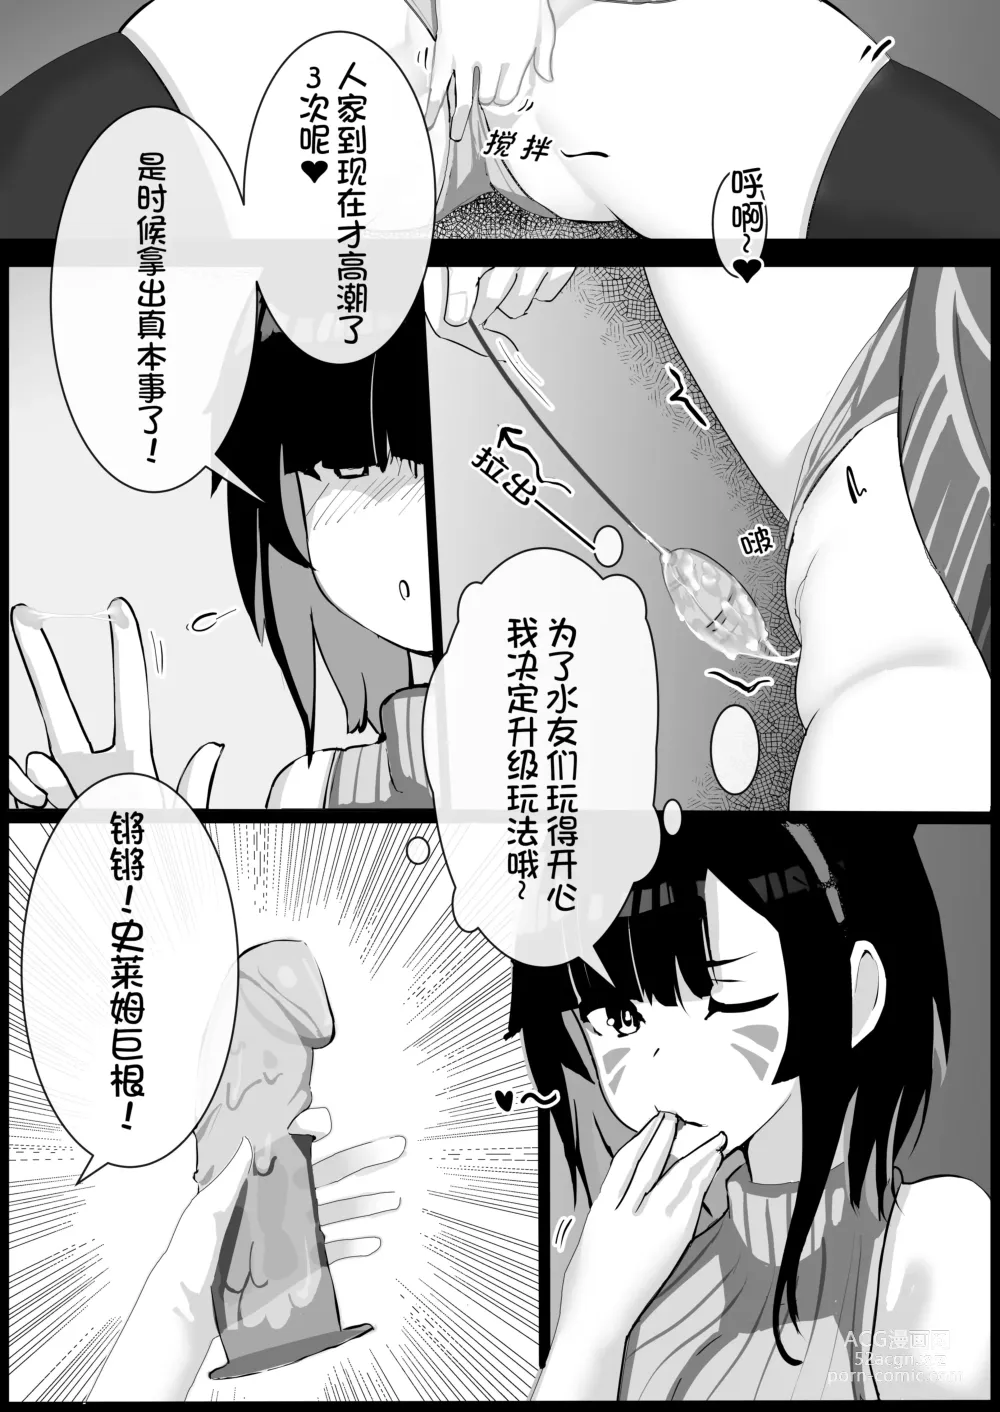 Page 8 of manga 皮物問題學生 #1 渡邊佳奈、2